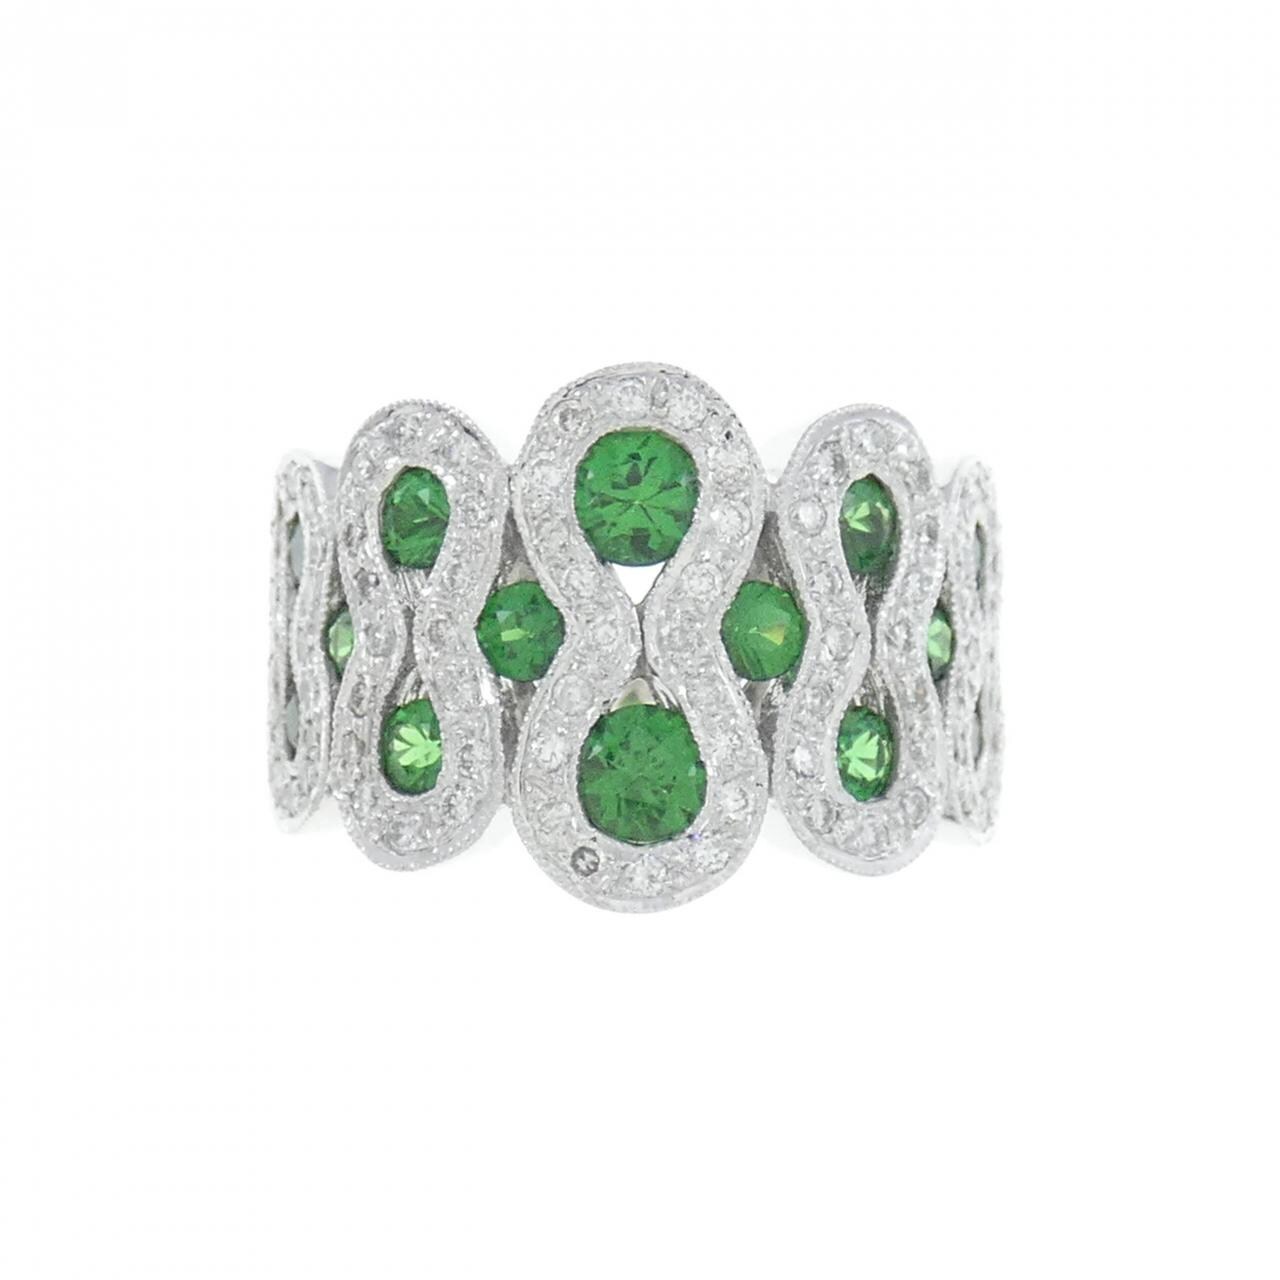 K18WG Green Garnet Ring 1.87CT